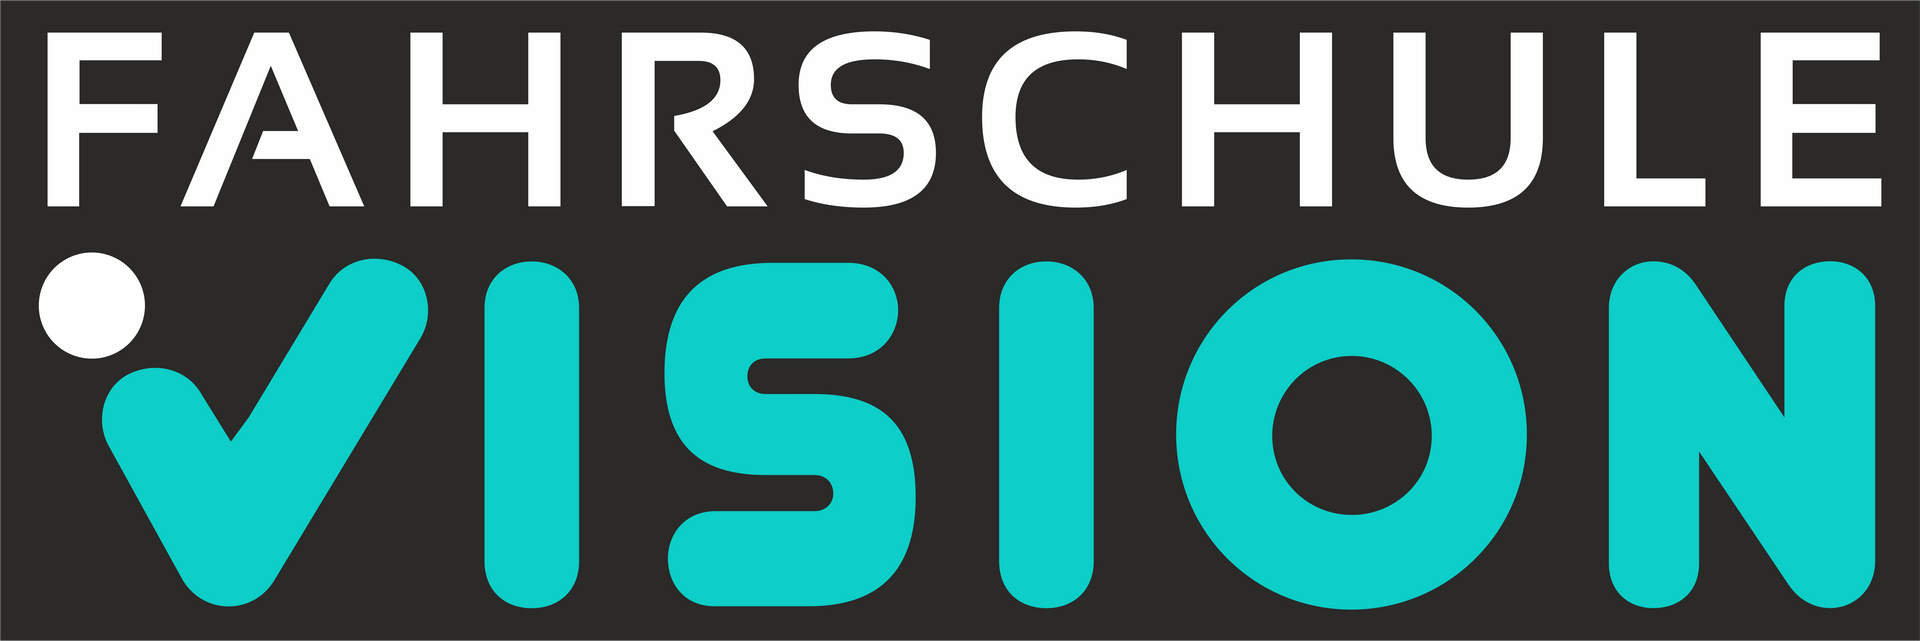 Fahrschule Vision GmbH